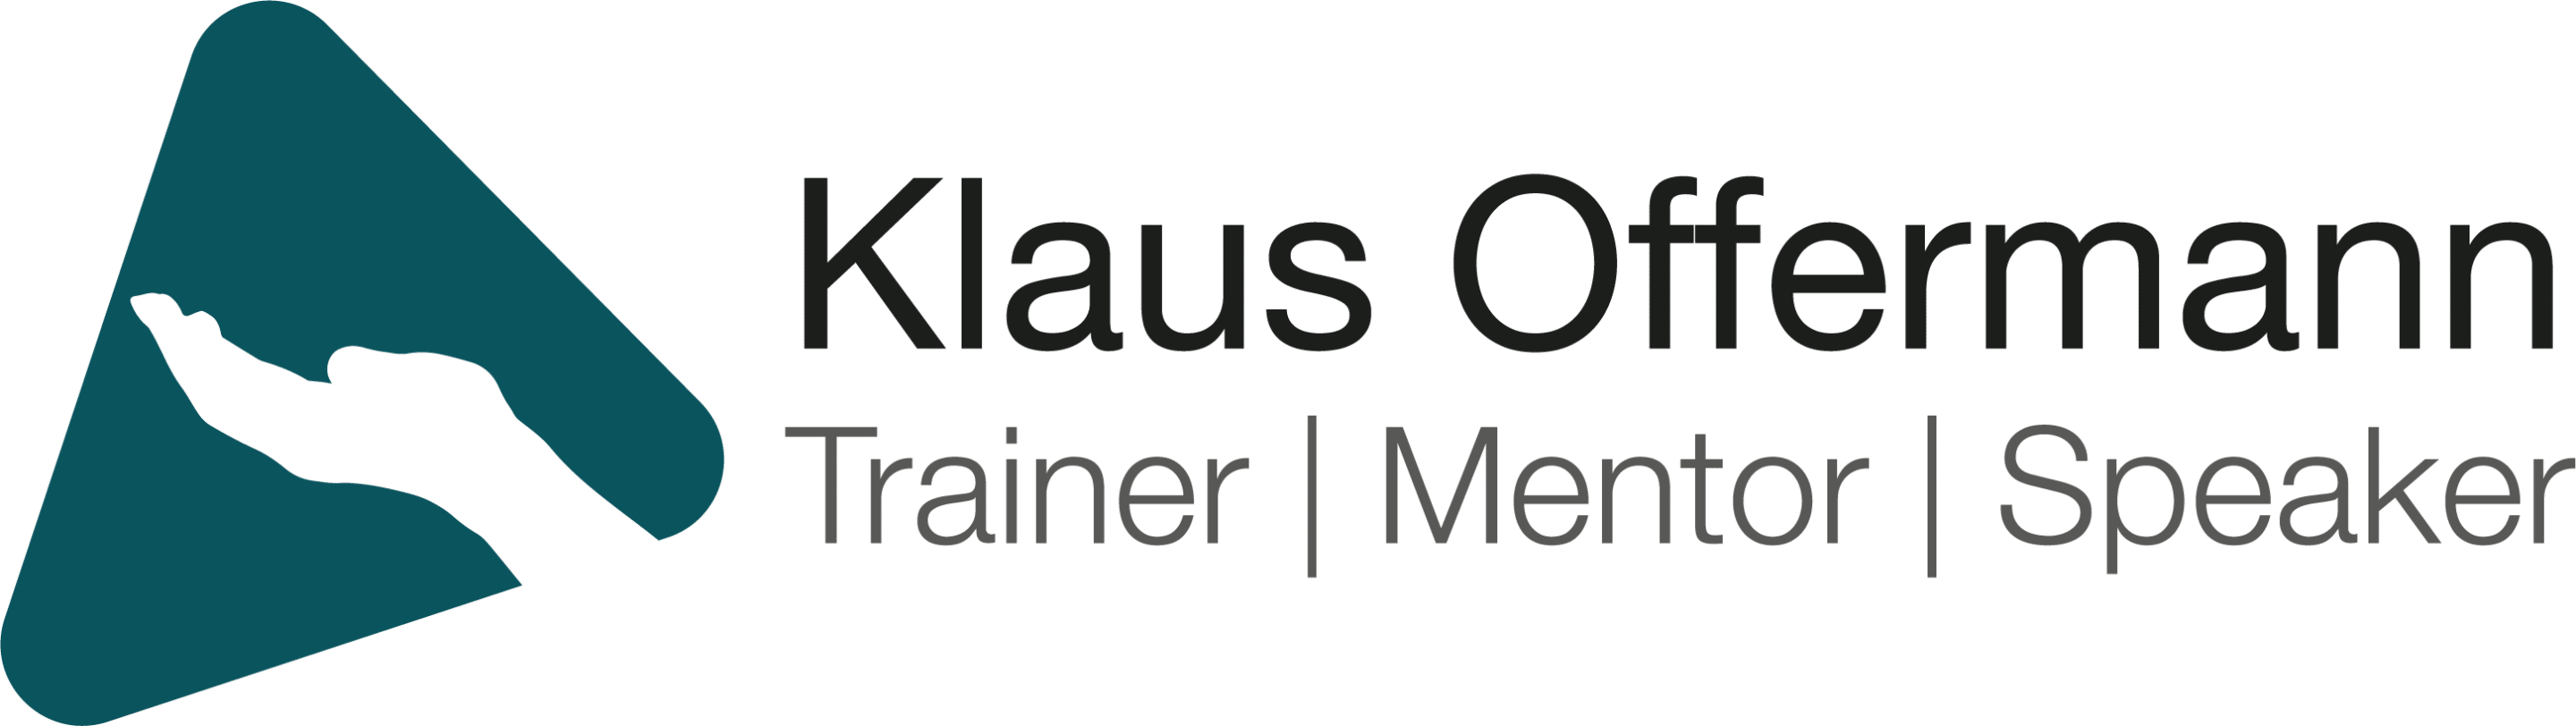 Klaus Offermann -  Trainer & Speaker